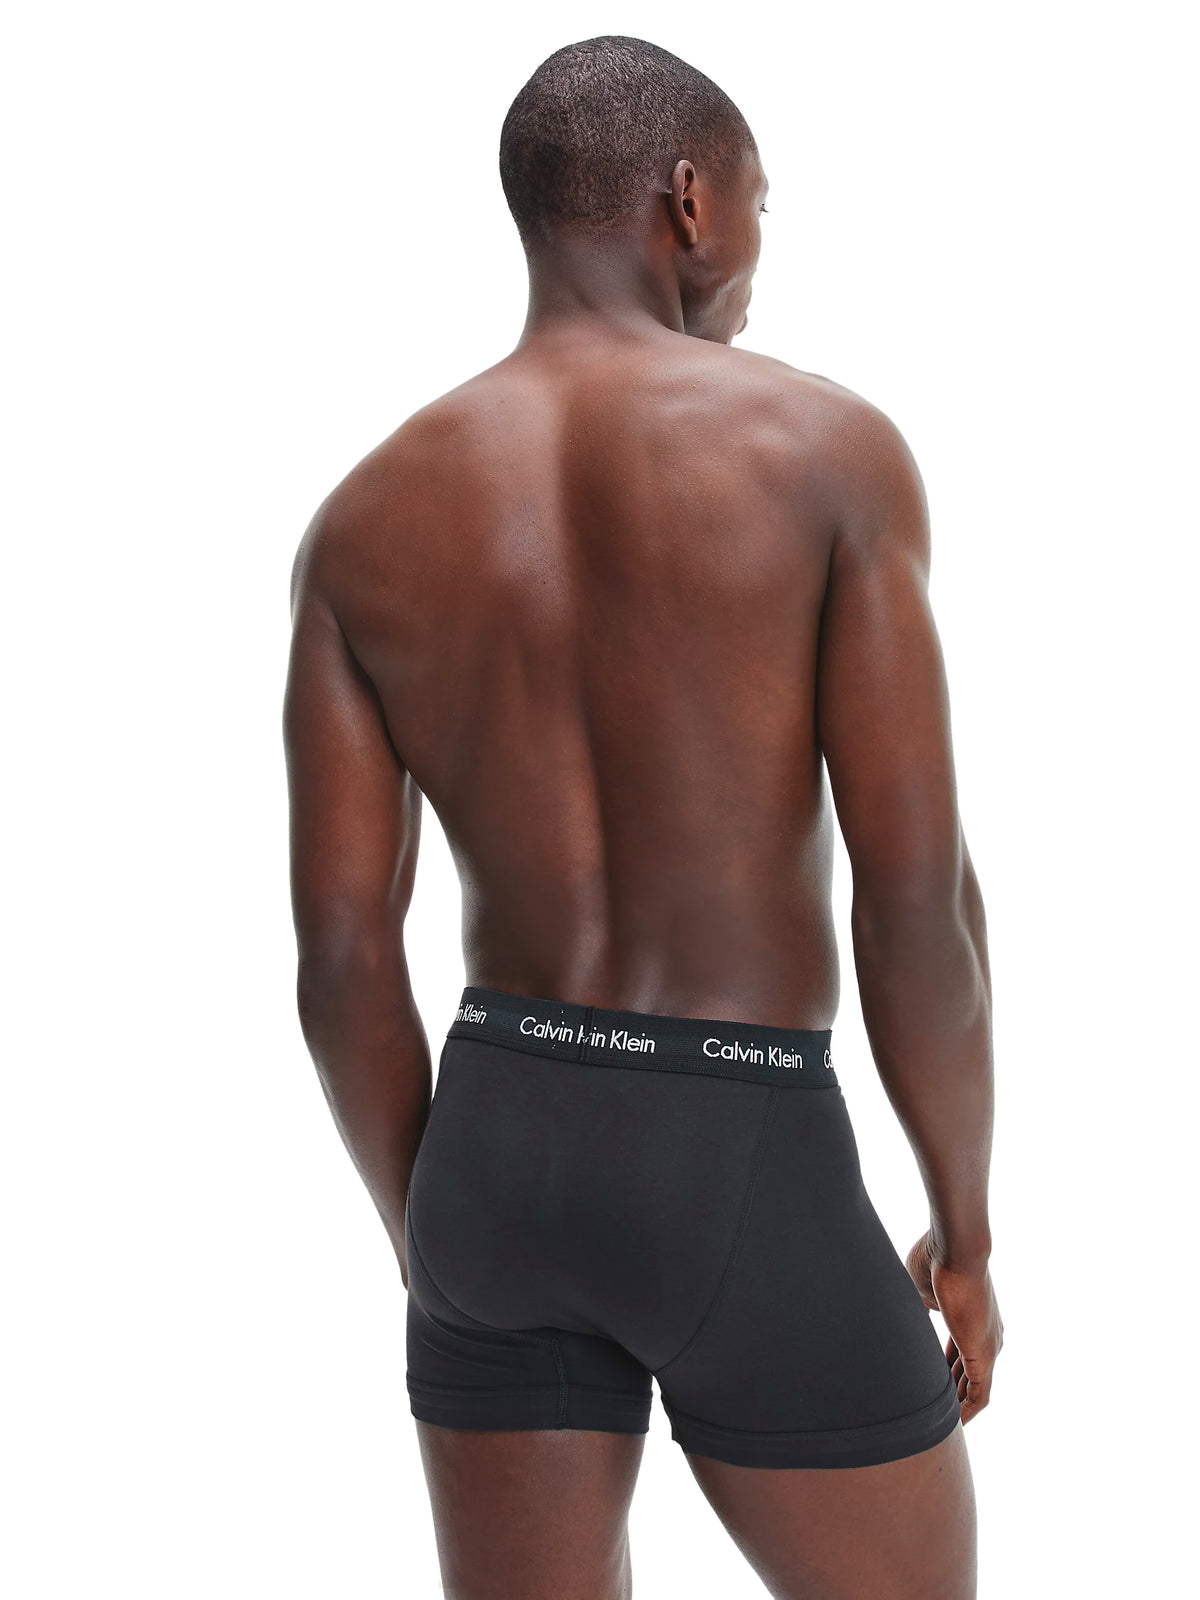 Calvin Klein Stretch Boxer Shorts/ Trunks (3-Pack) - White/ B&W Stripe/ Black, 05, U2662G_IOT, White/ B&W Stripe/ Black